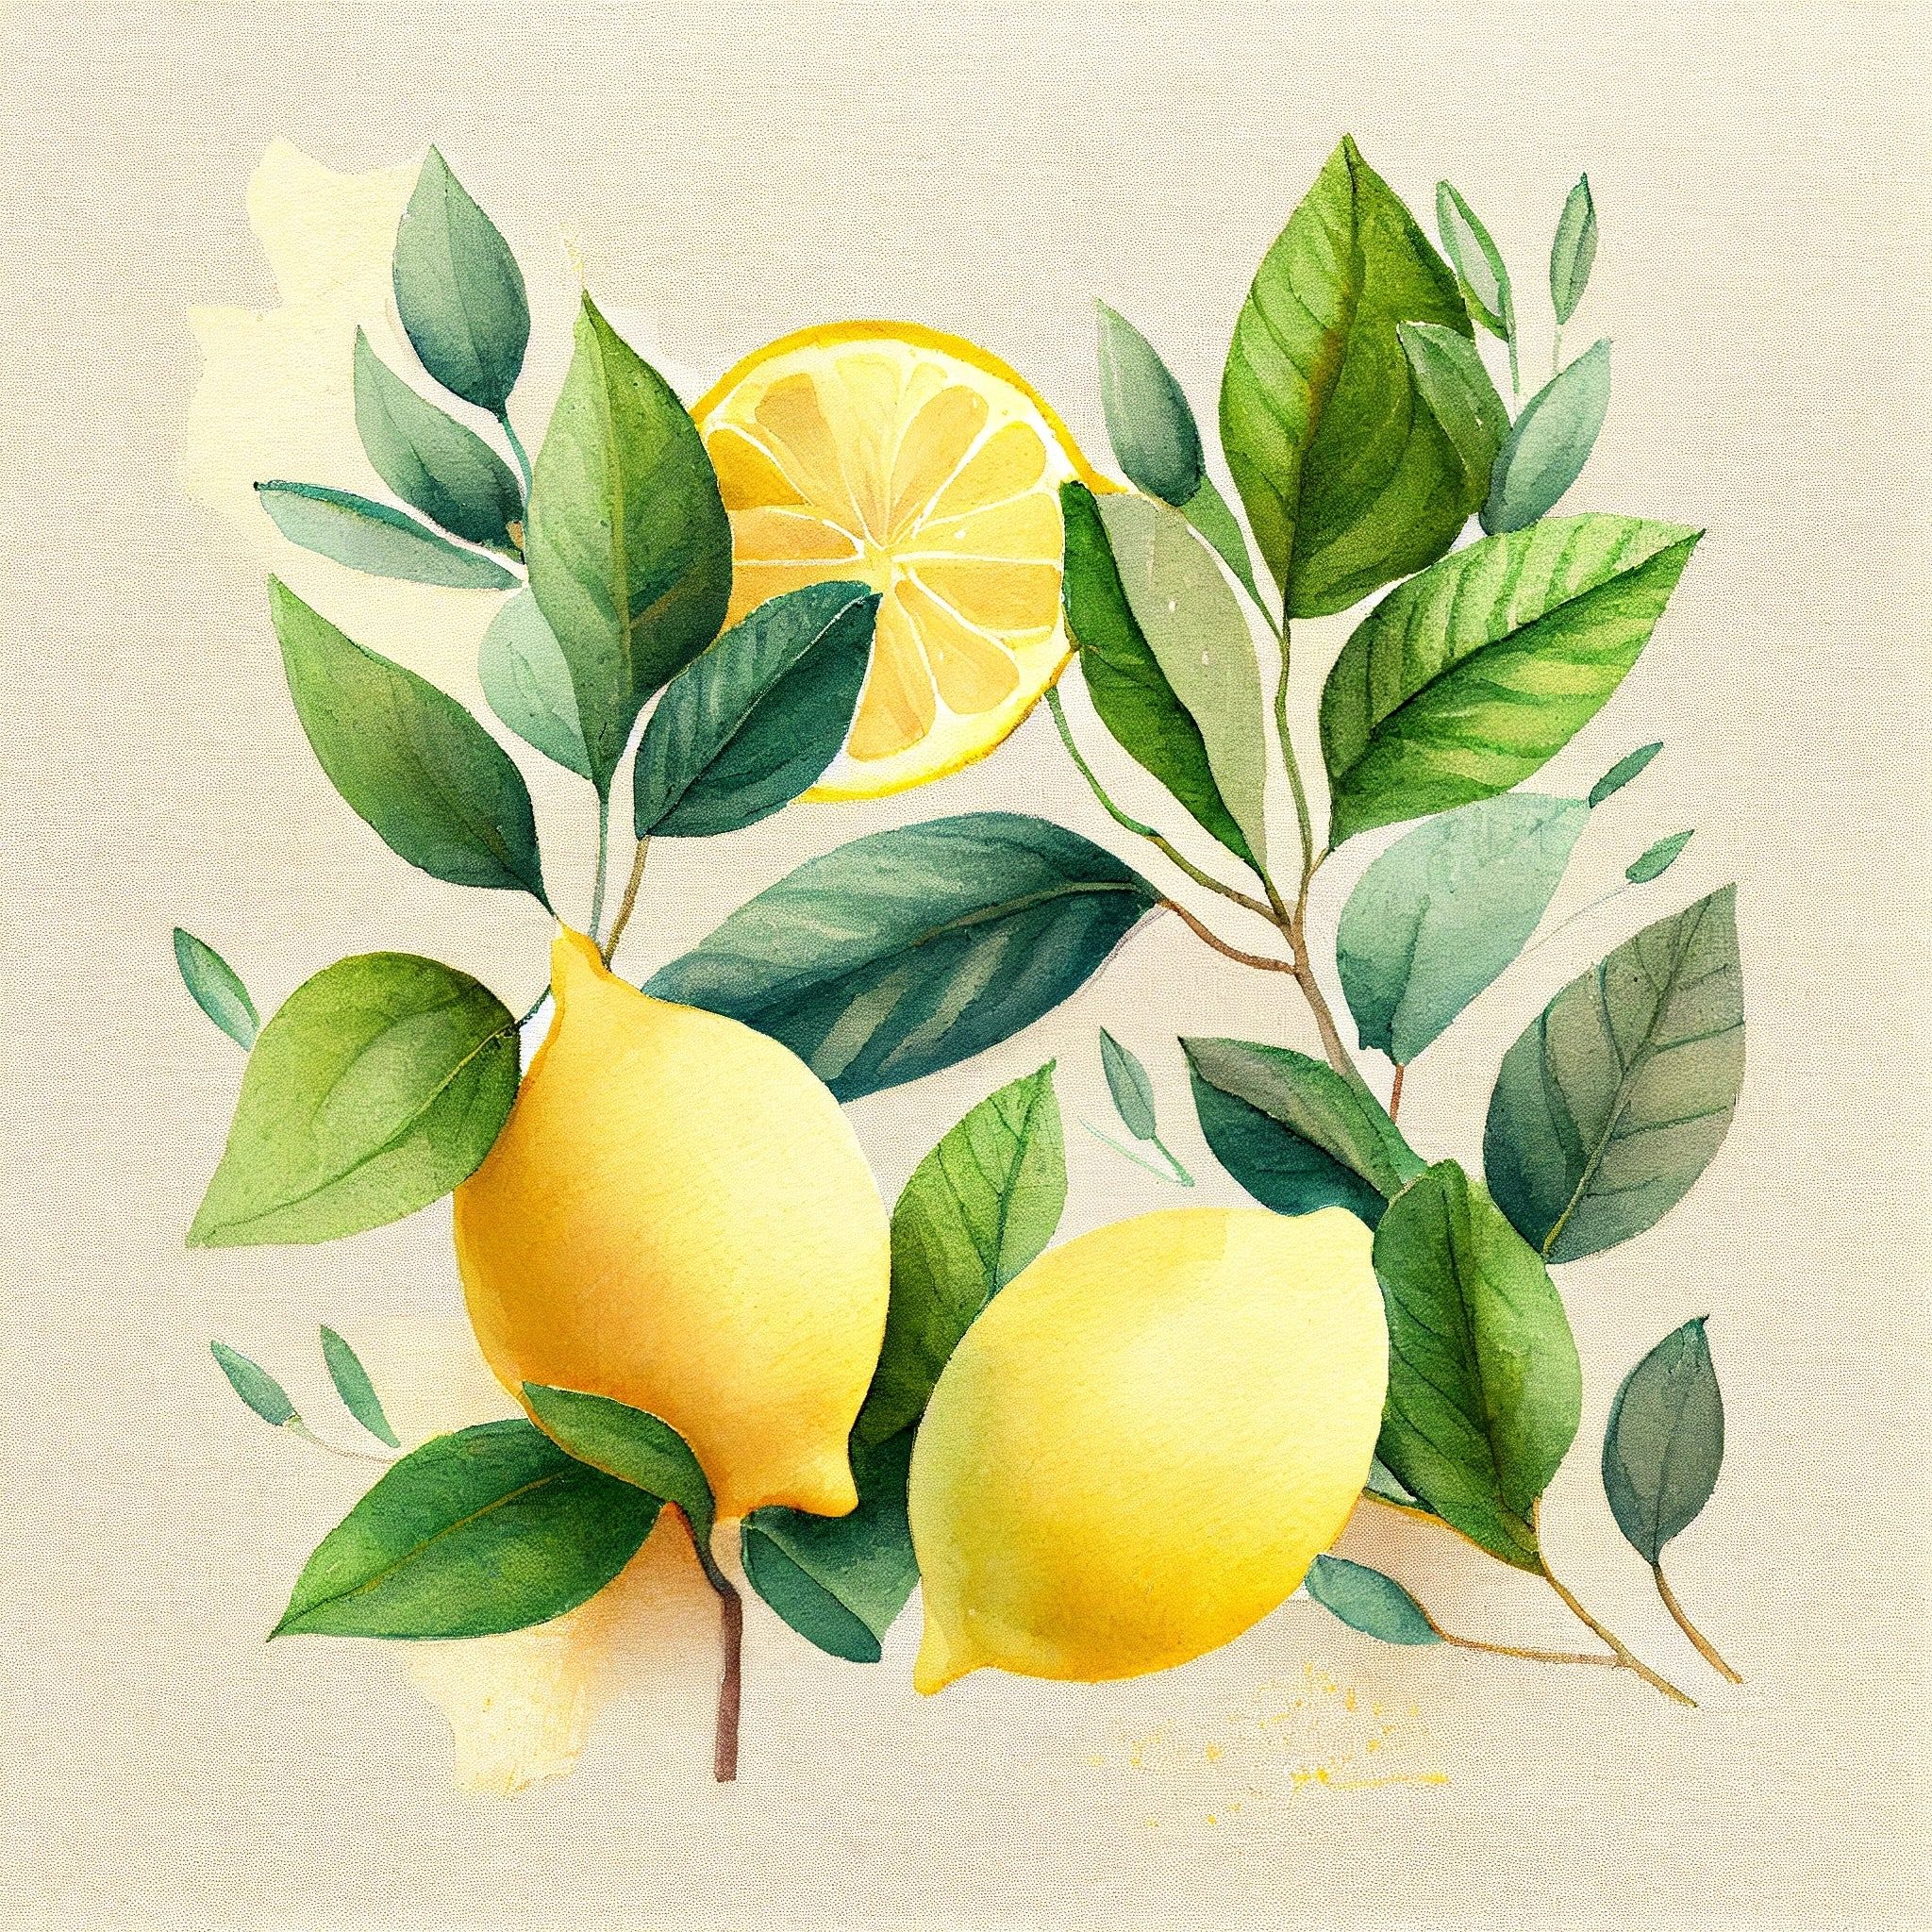 Lemon Tree Delight: Watercolor Print of Lemons and Greenery